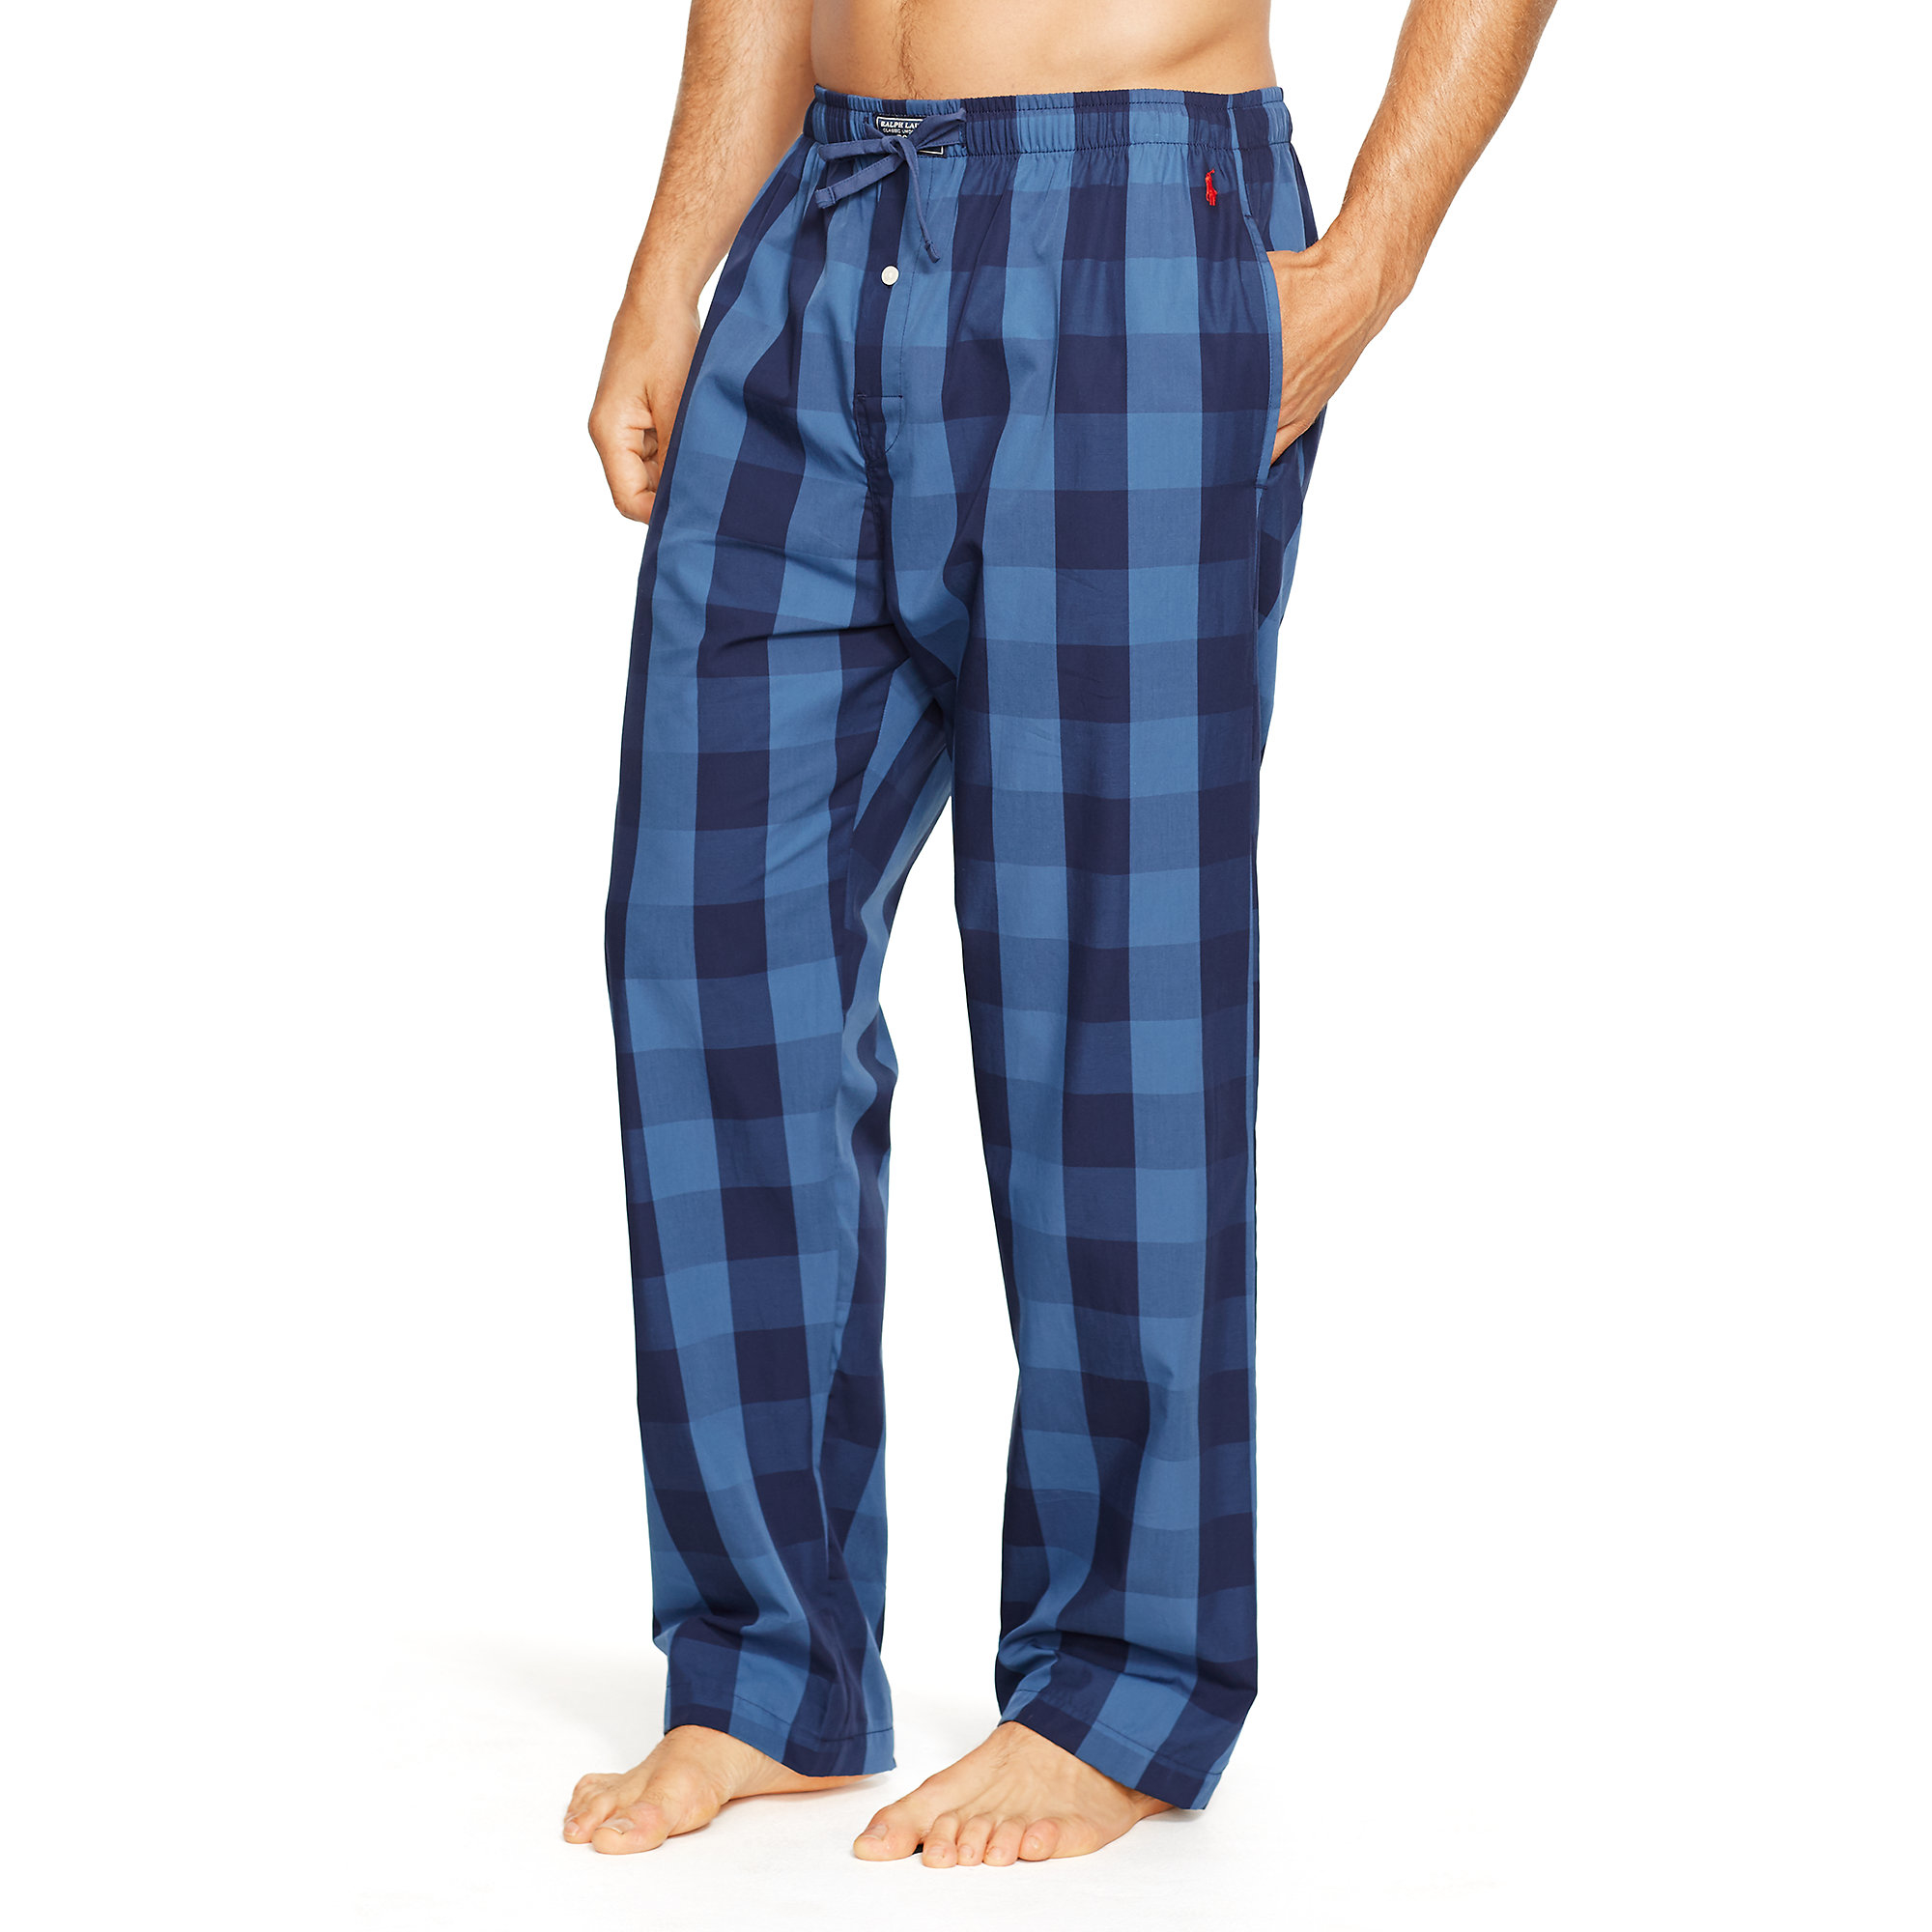 Lyst - Polo Ralph Lauren Buffalo Plaid Pajama Pant in Blue